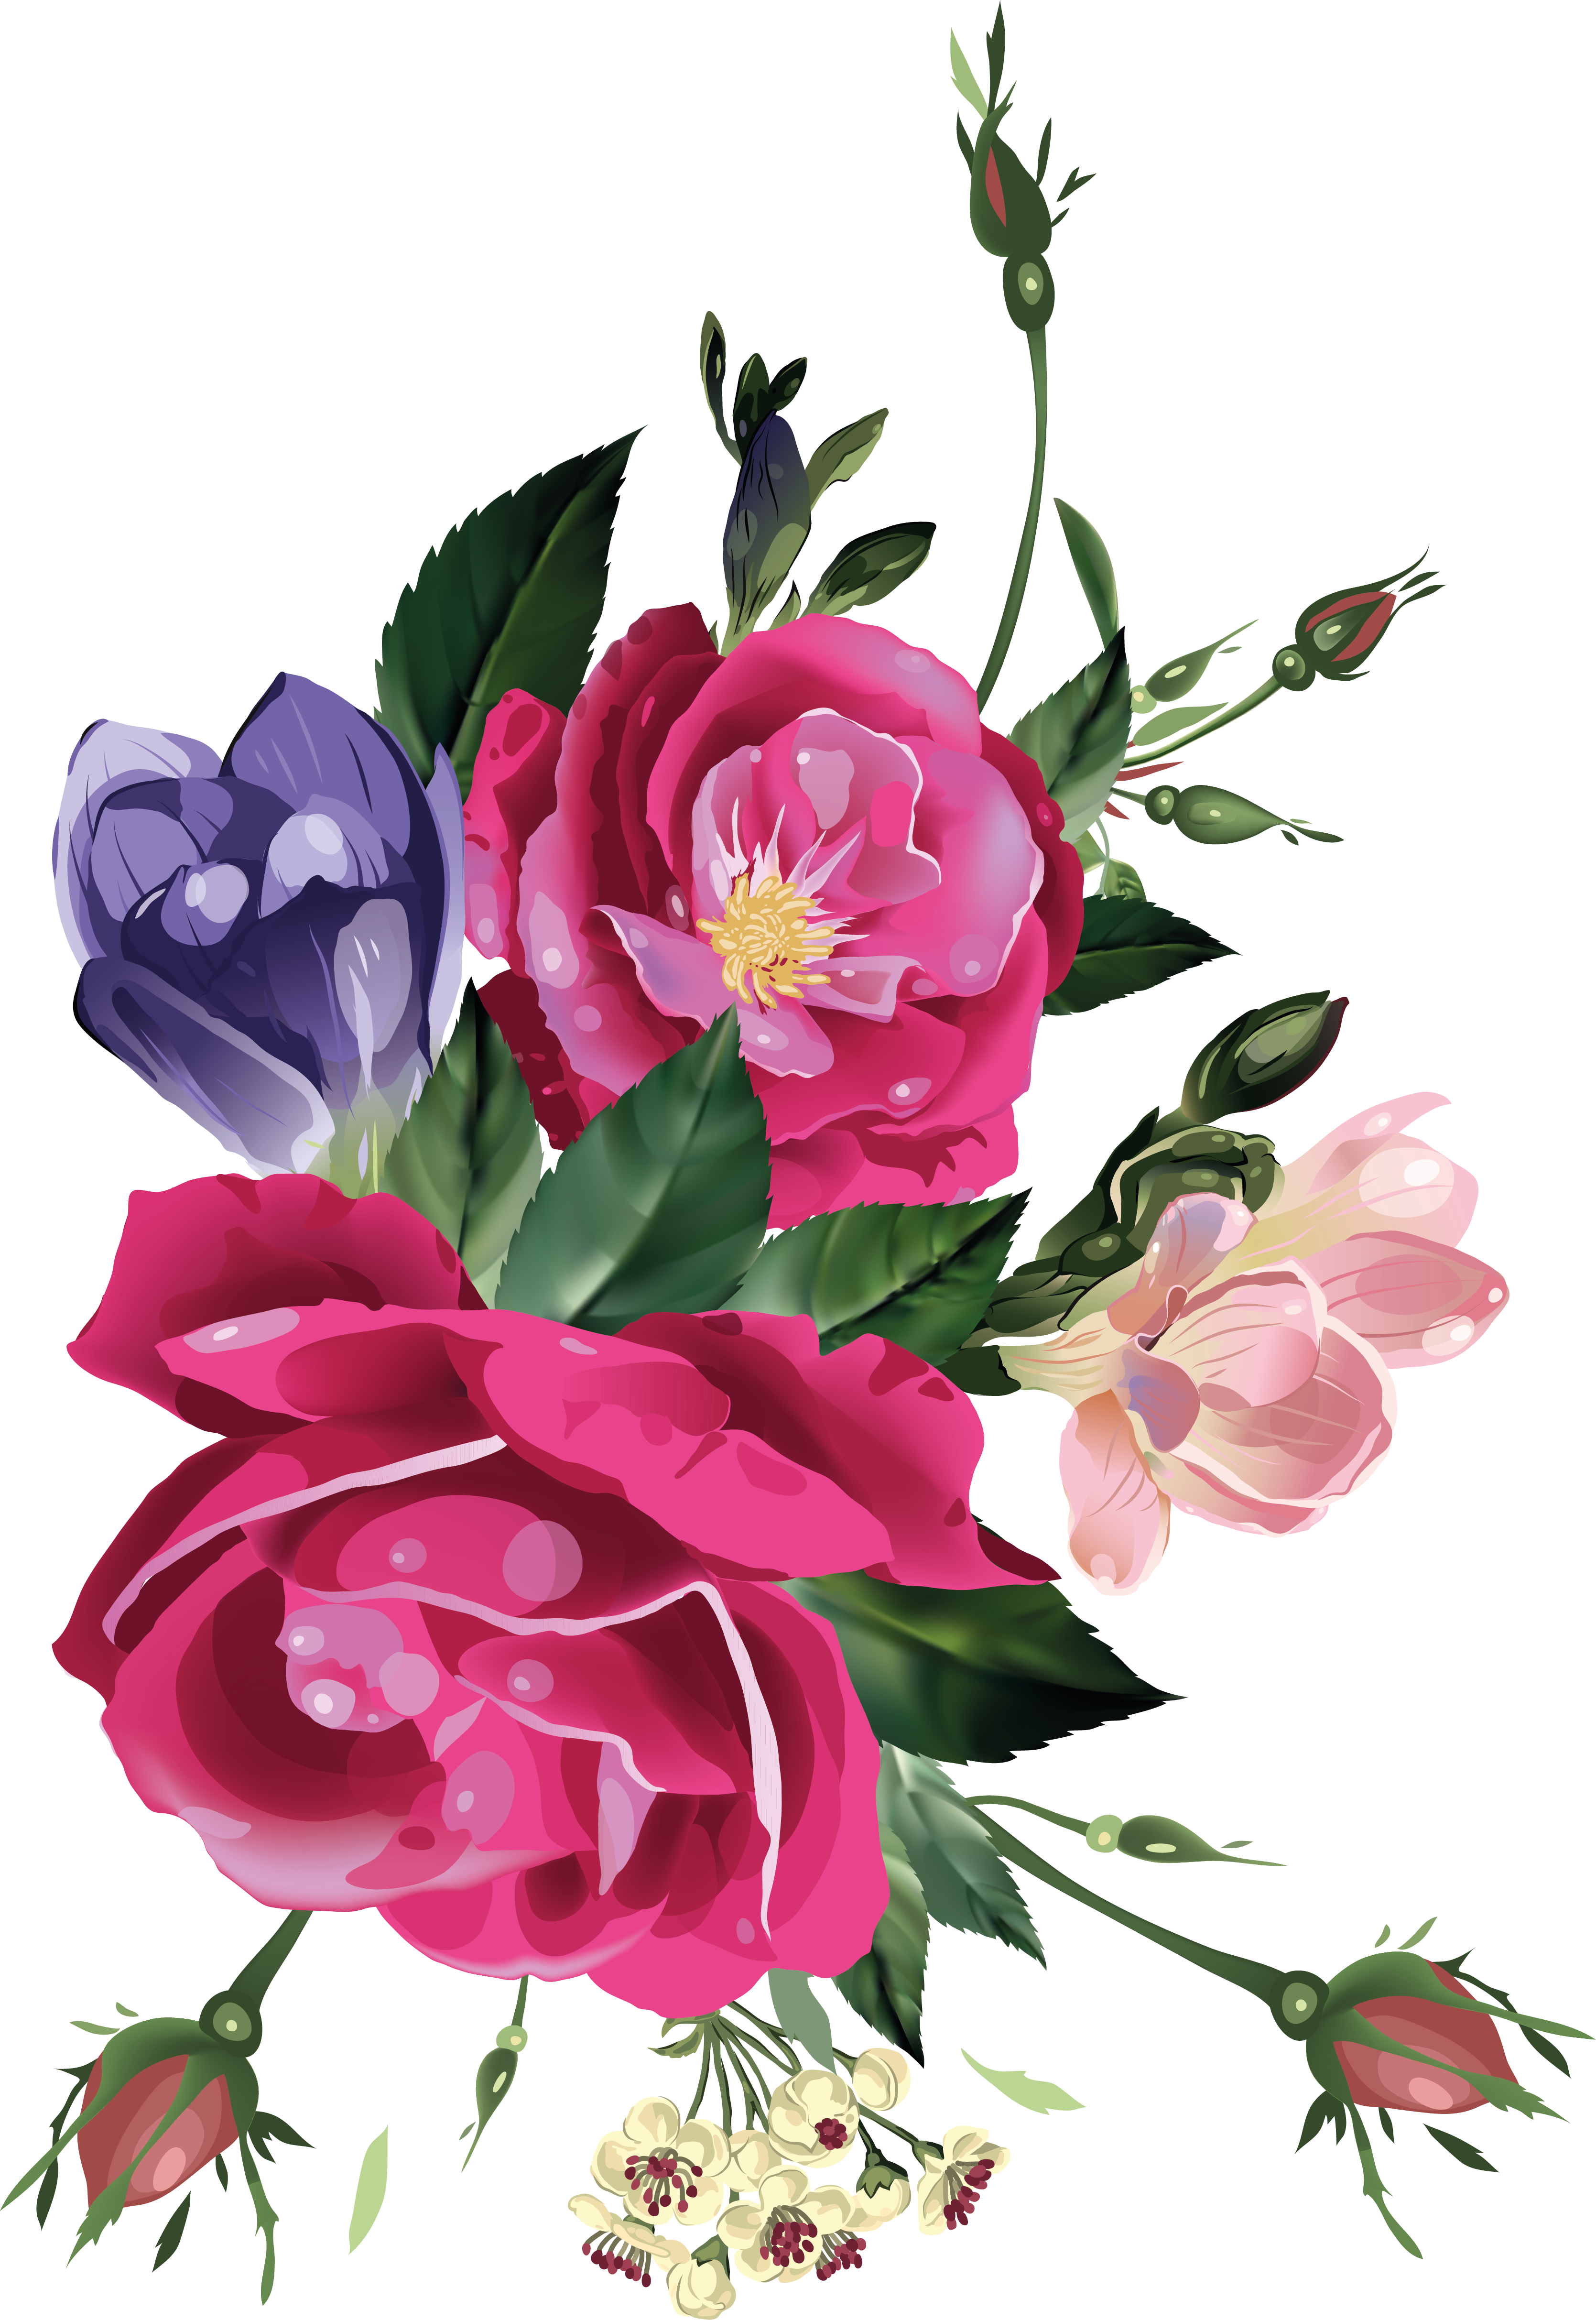 Flower illustration png. Flowers xxl decoupage pinterest